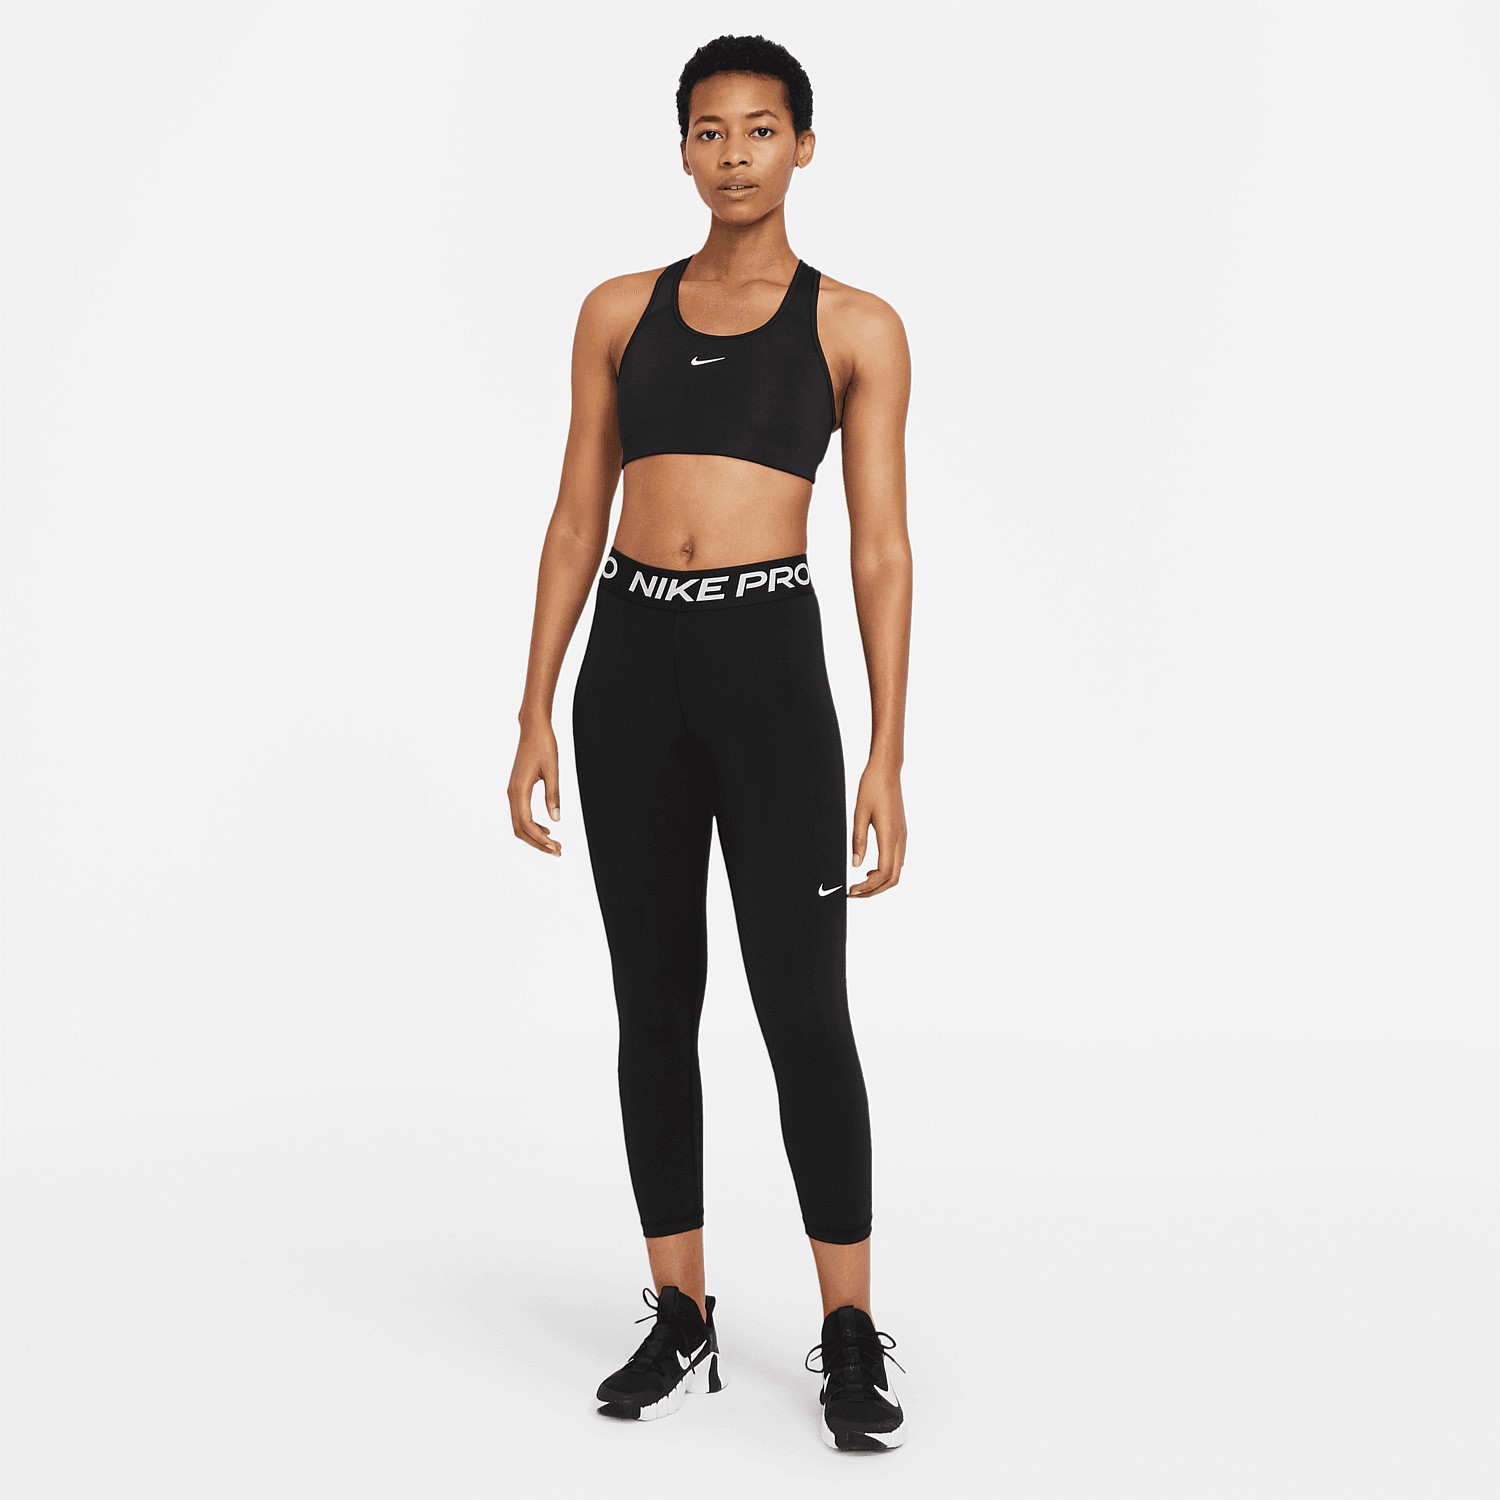 Nike Pro Training capri legging in black